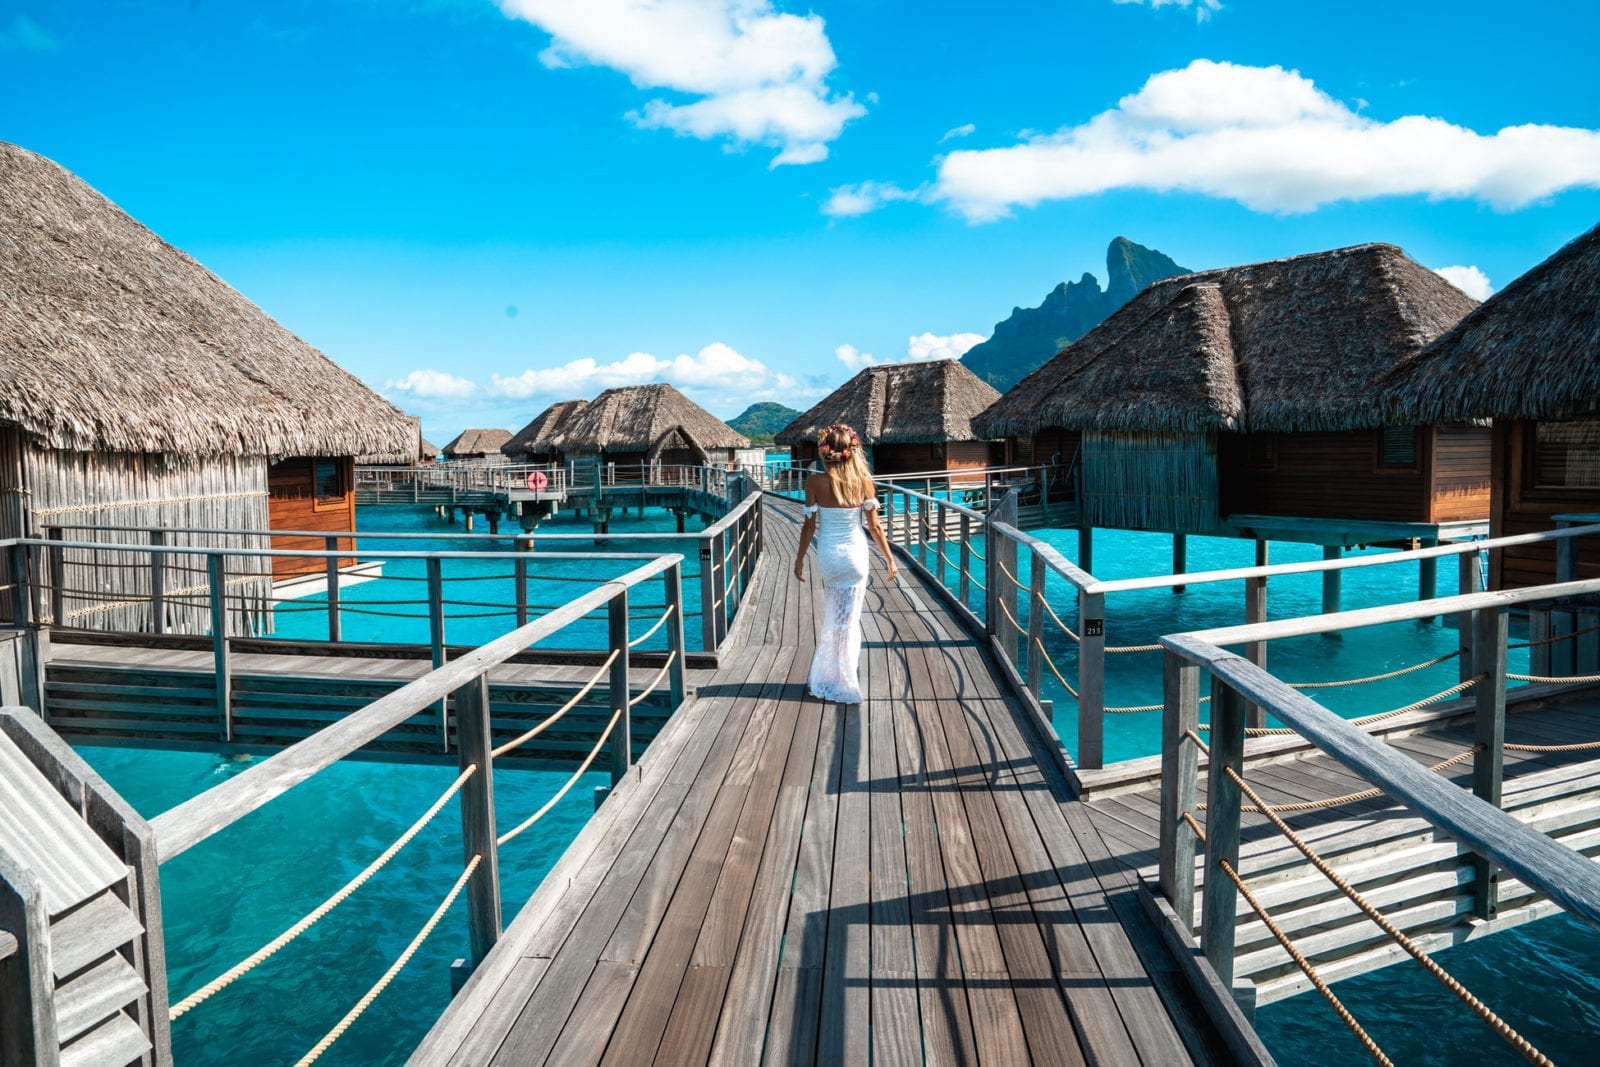 https://www.jetsetchristina.com/wp-content/uploads/2019/03/best-bungalows-overwater-bungalow-four-seasons-bora-bora-luxury-hotel-resort-honeymoon-lxue-1-scaled.jpg